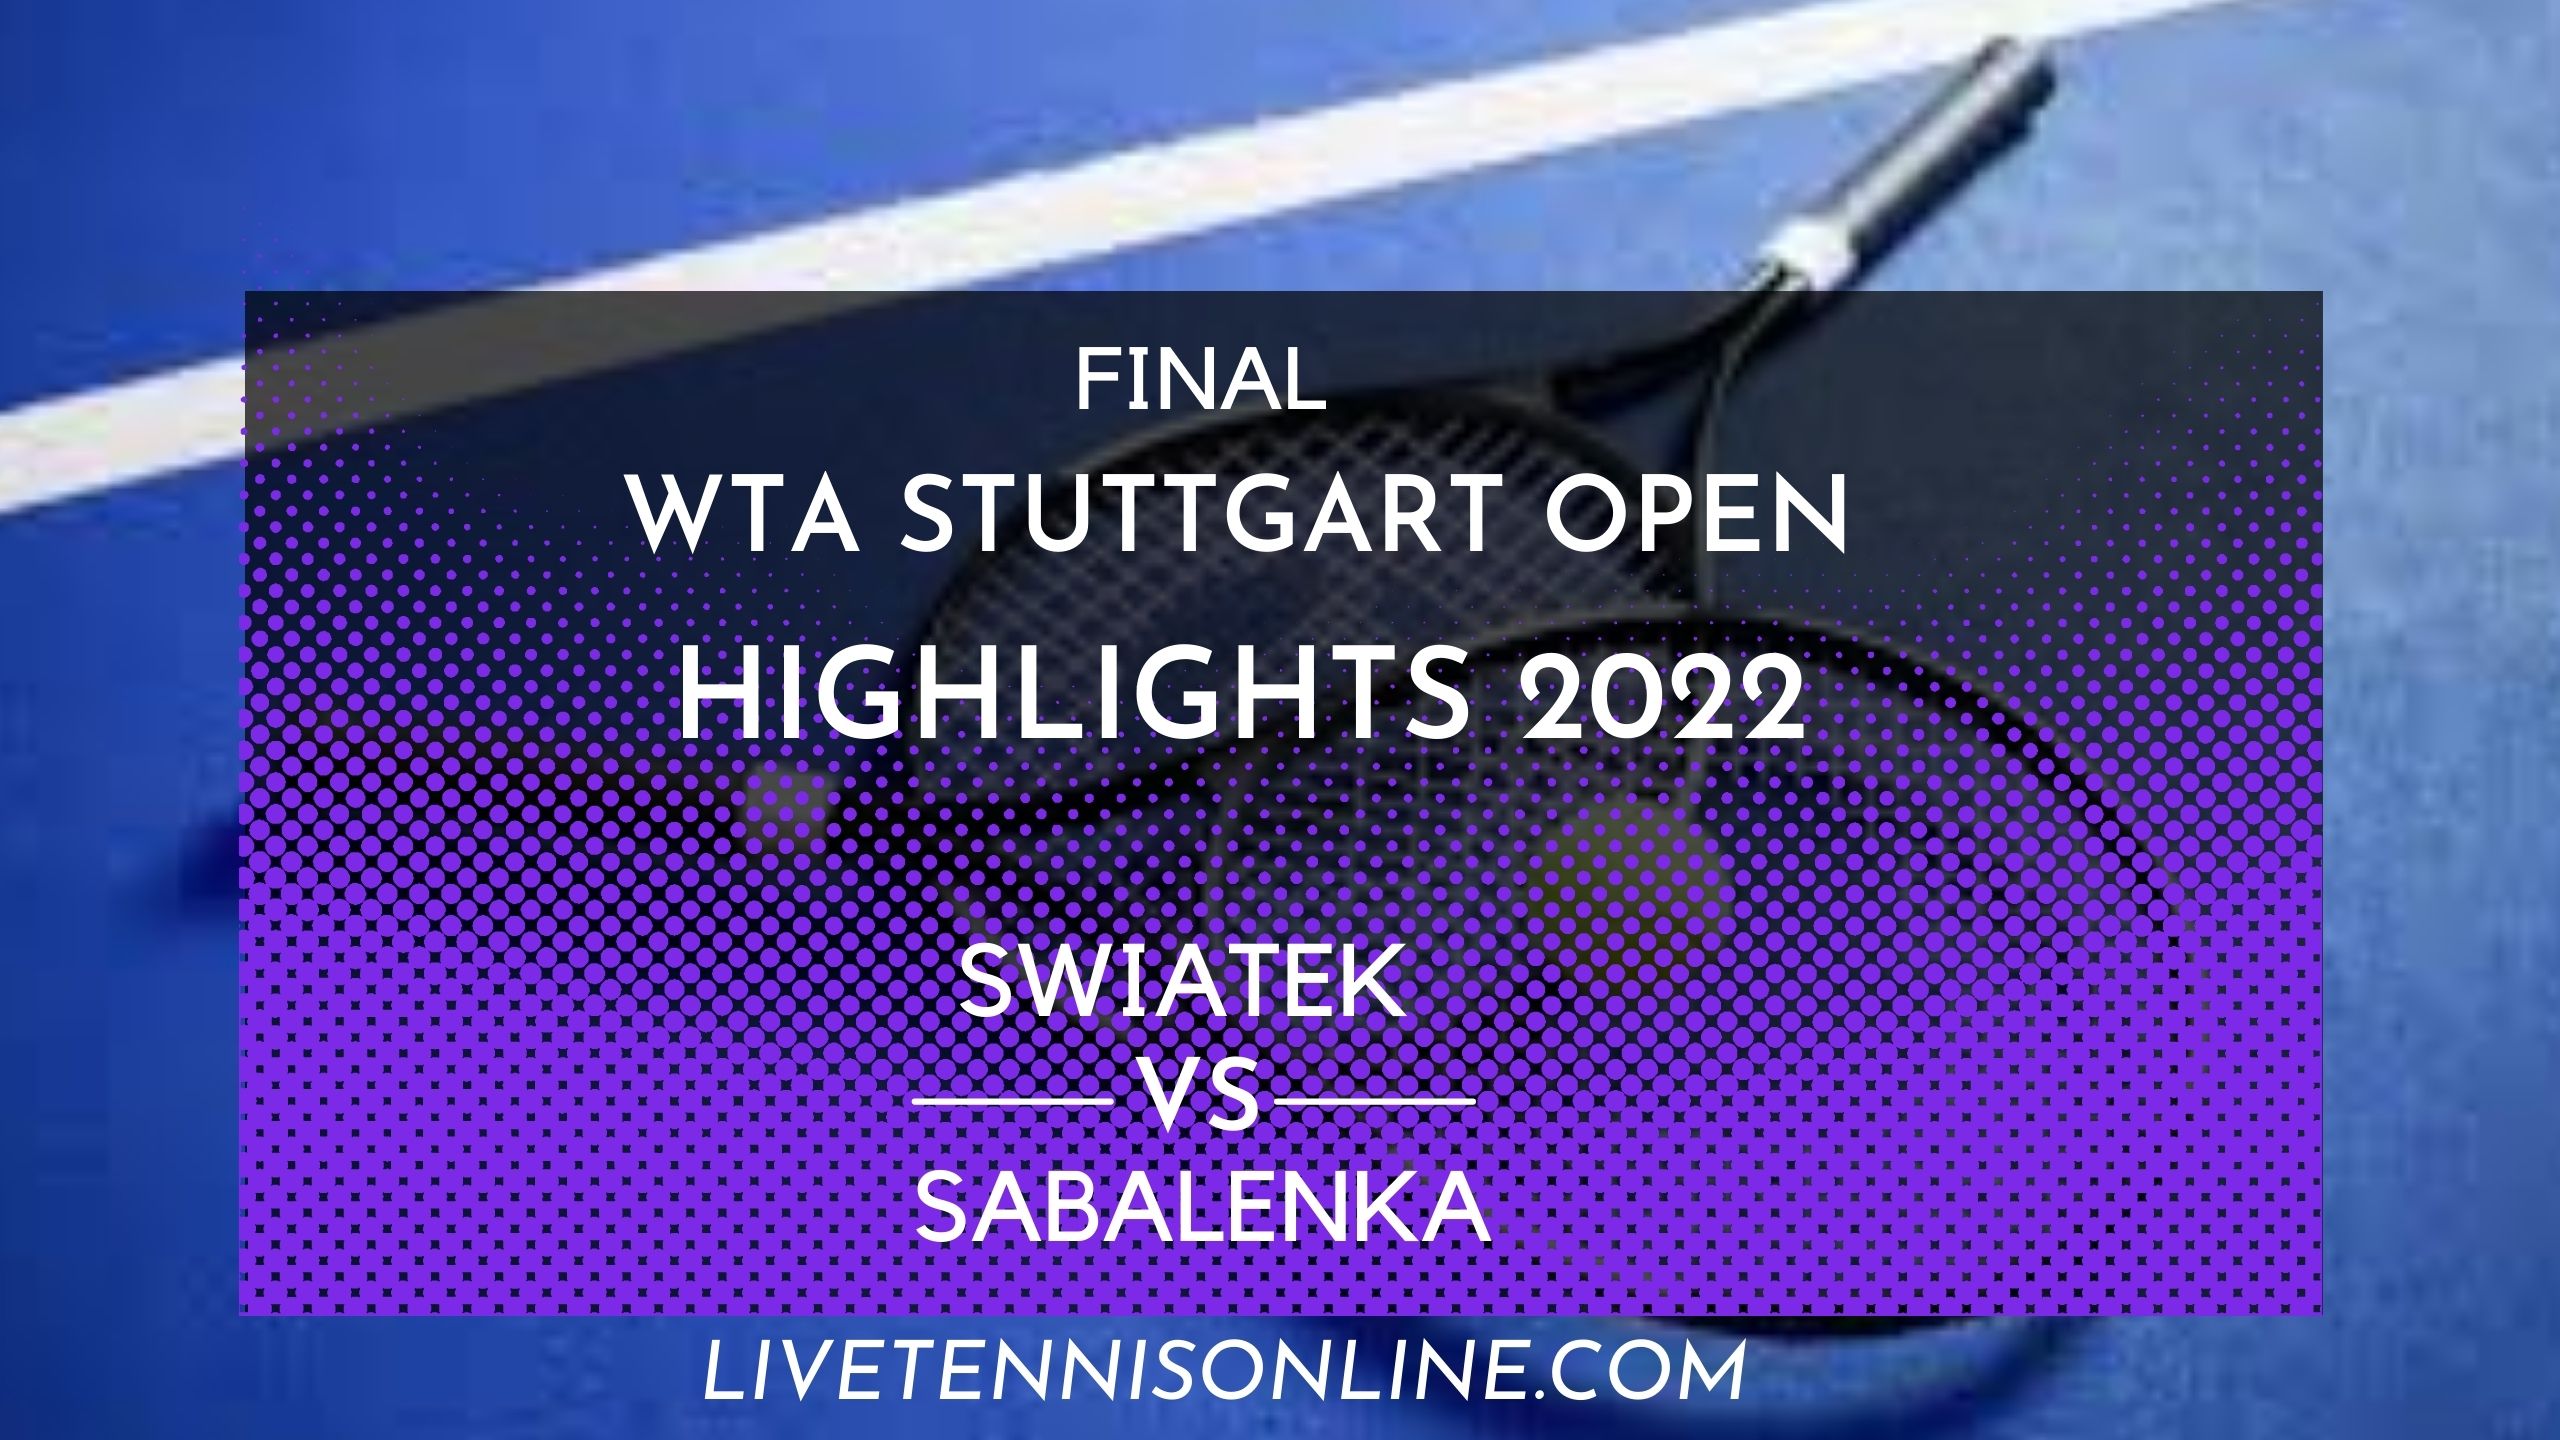 Swiatek Vs Sabalenka Final Highlights 2022